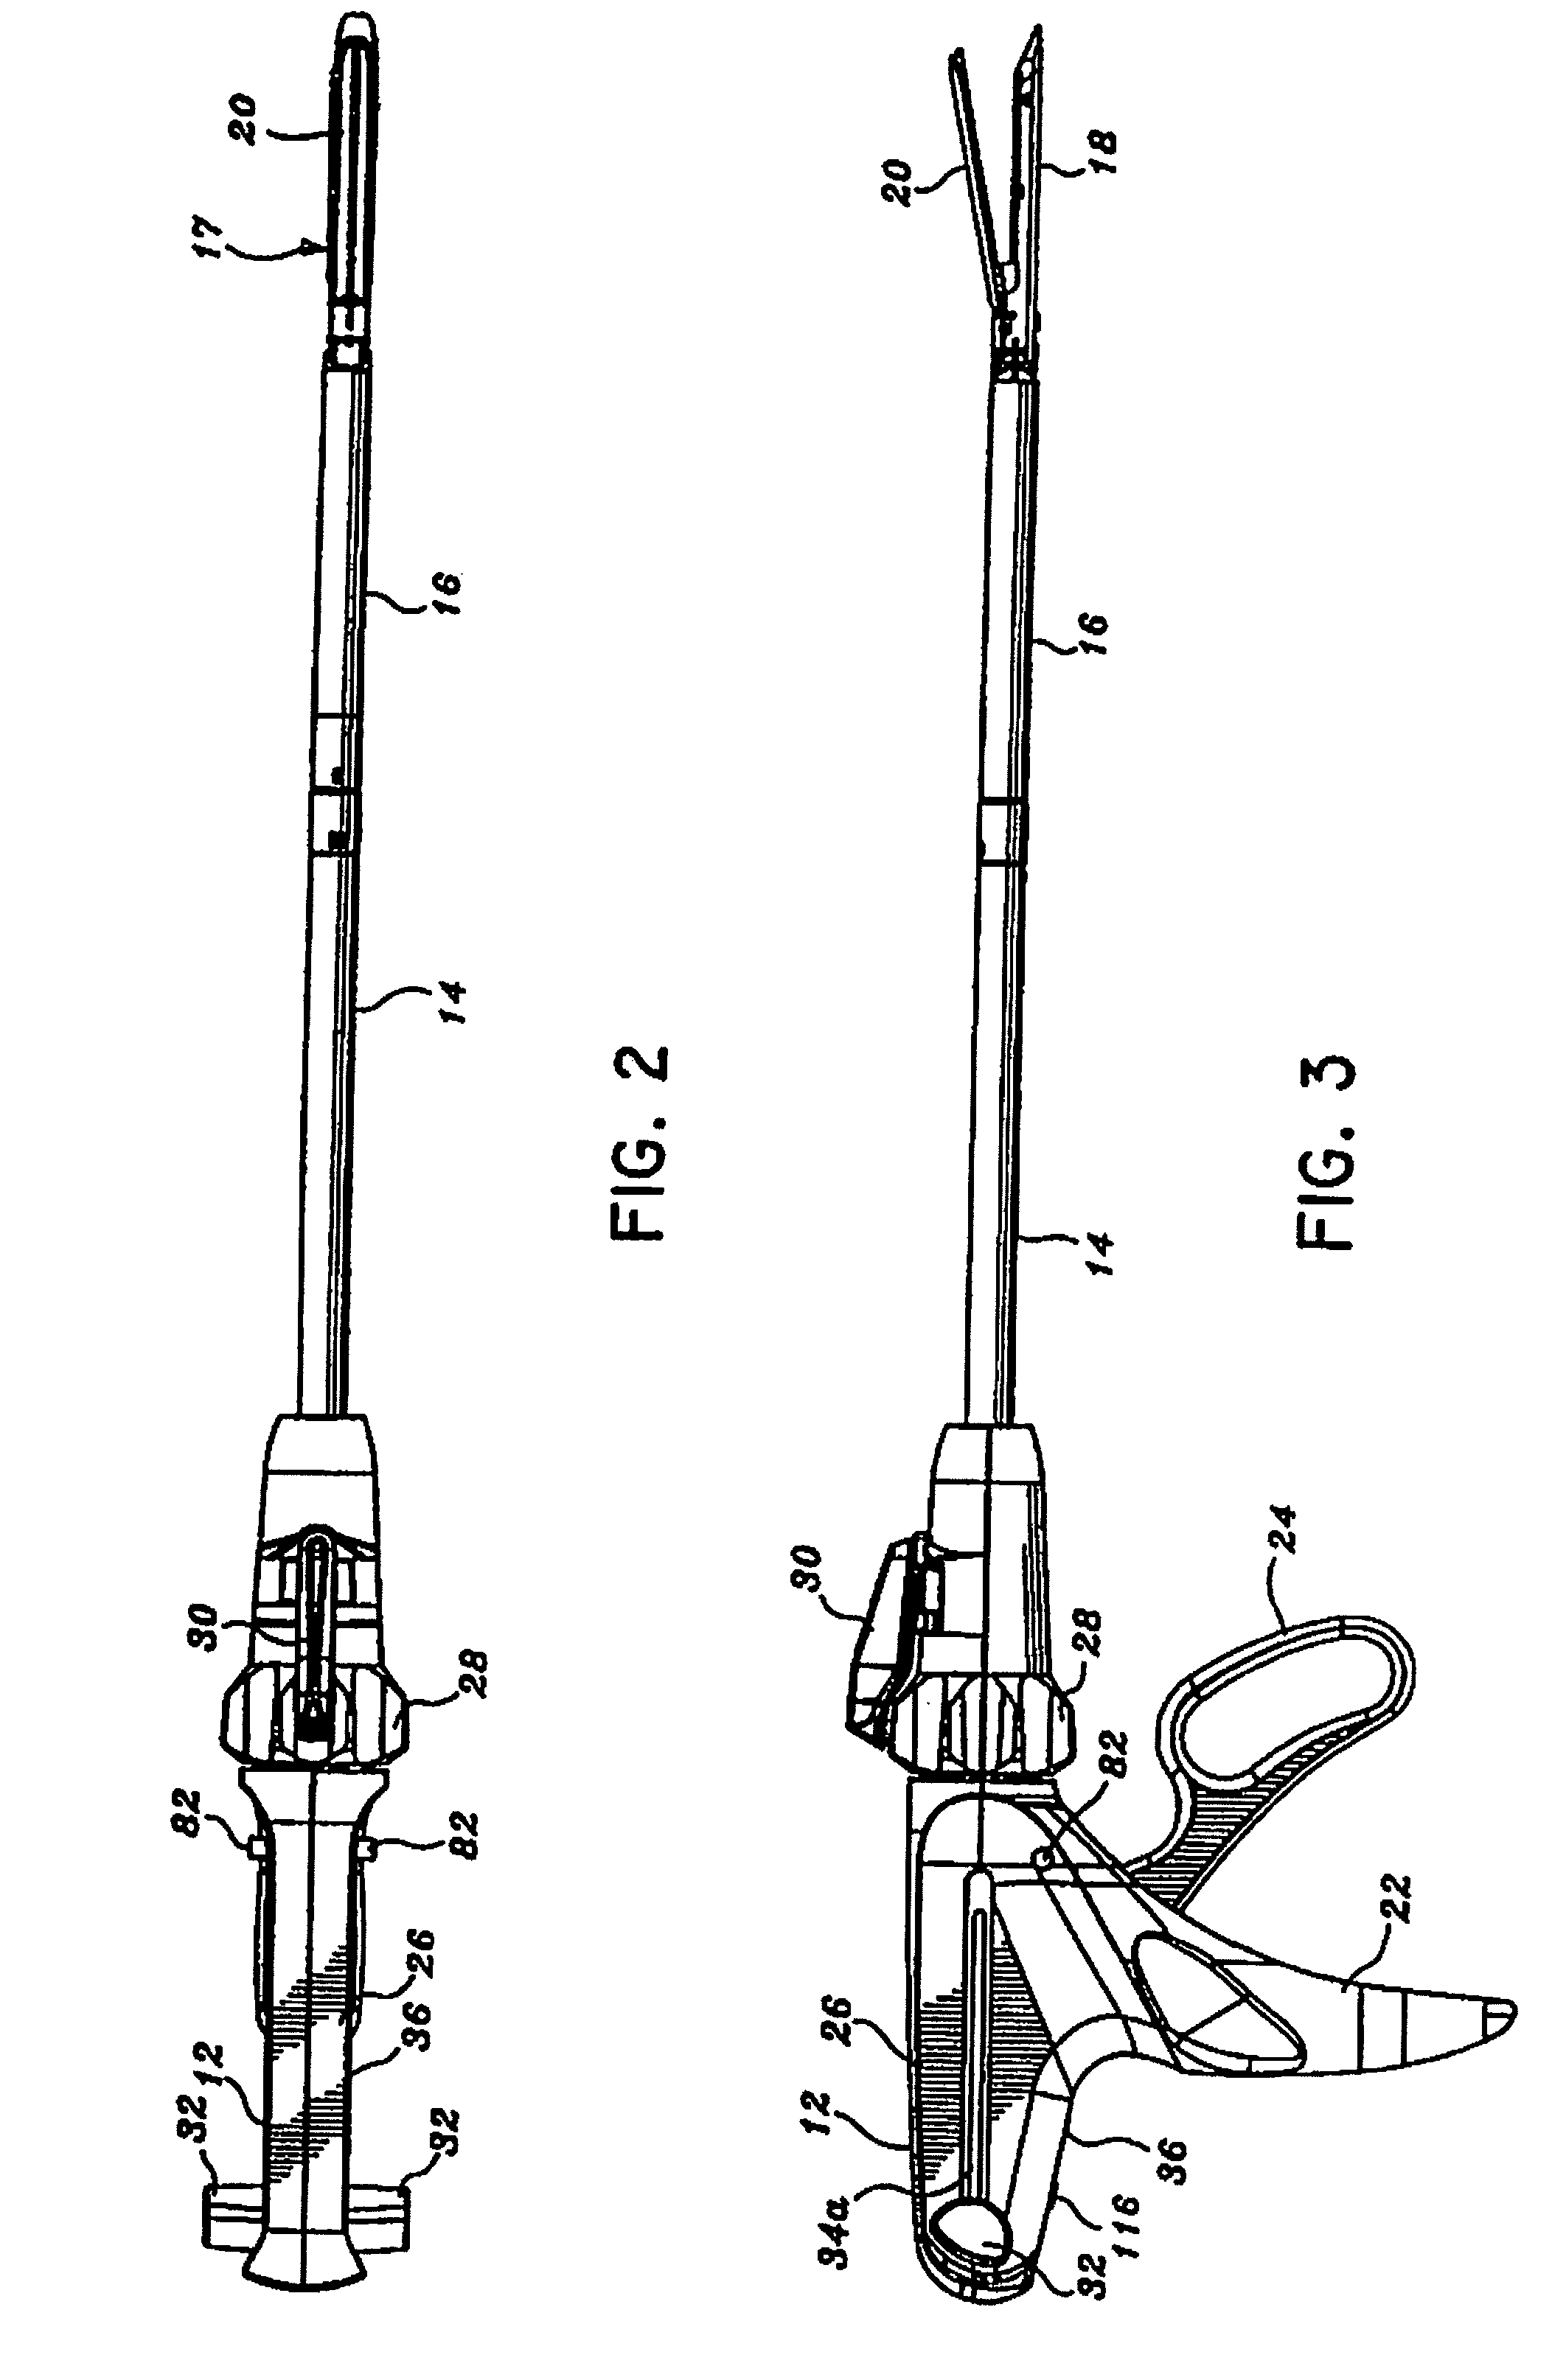 Surgical stapling apparatus having articulation mechanism